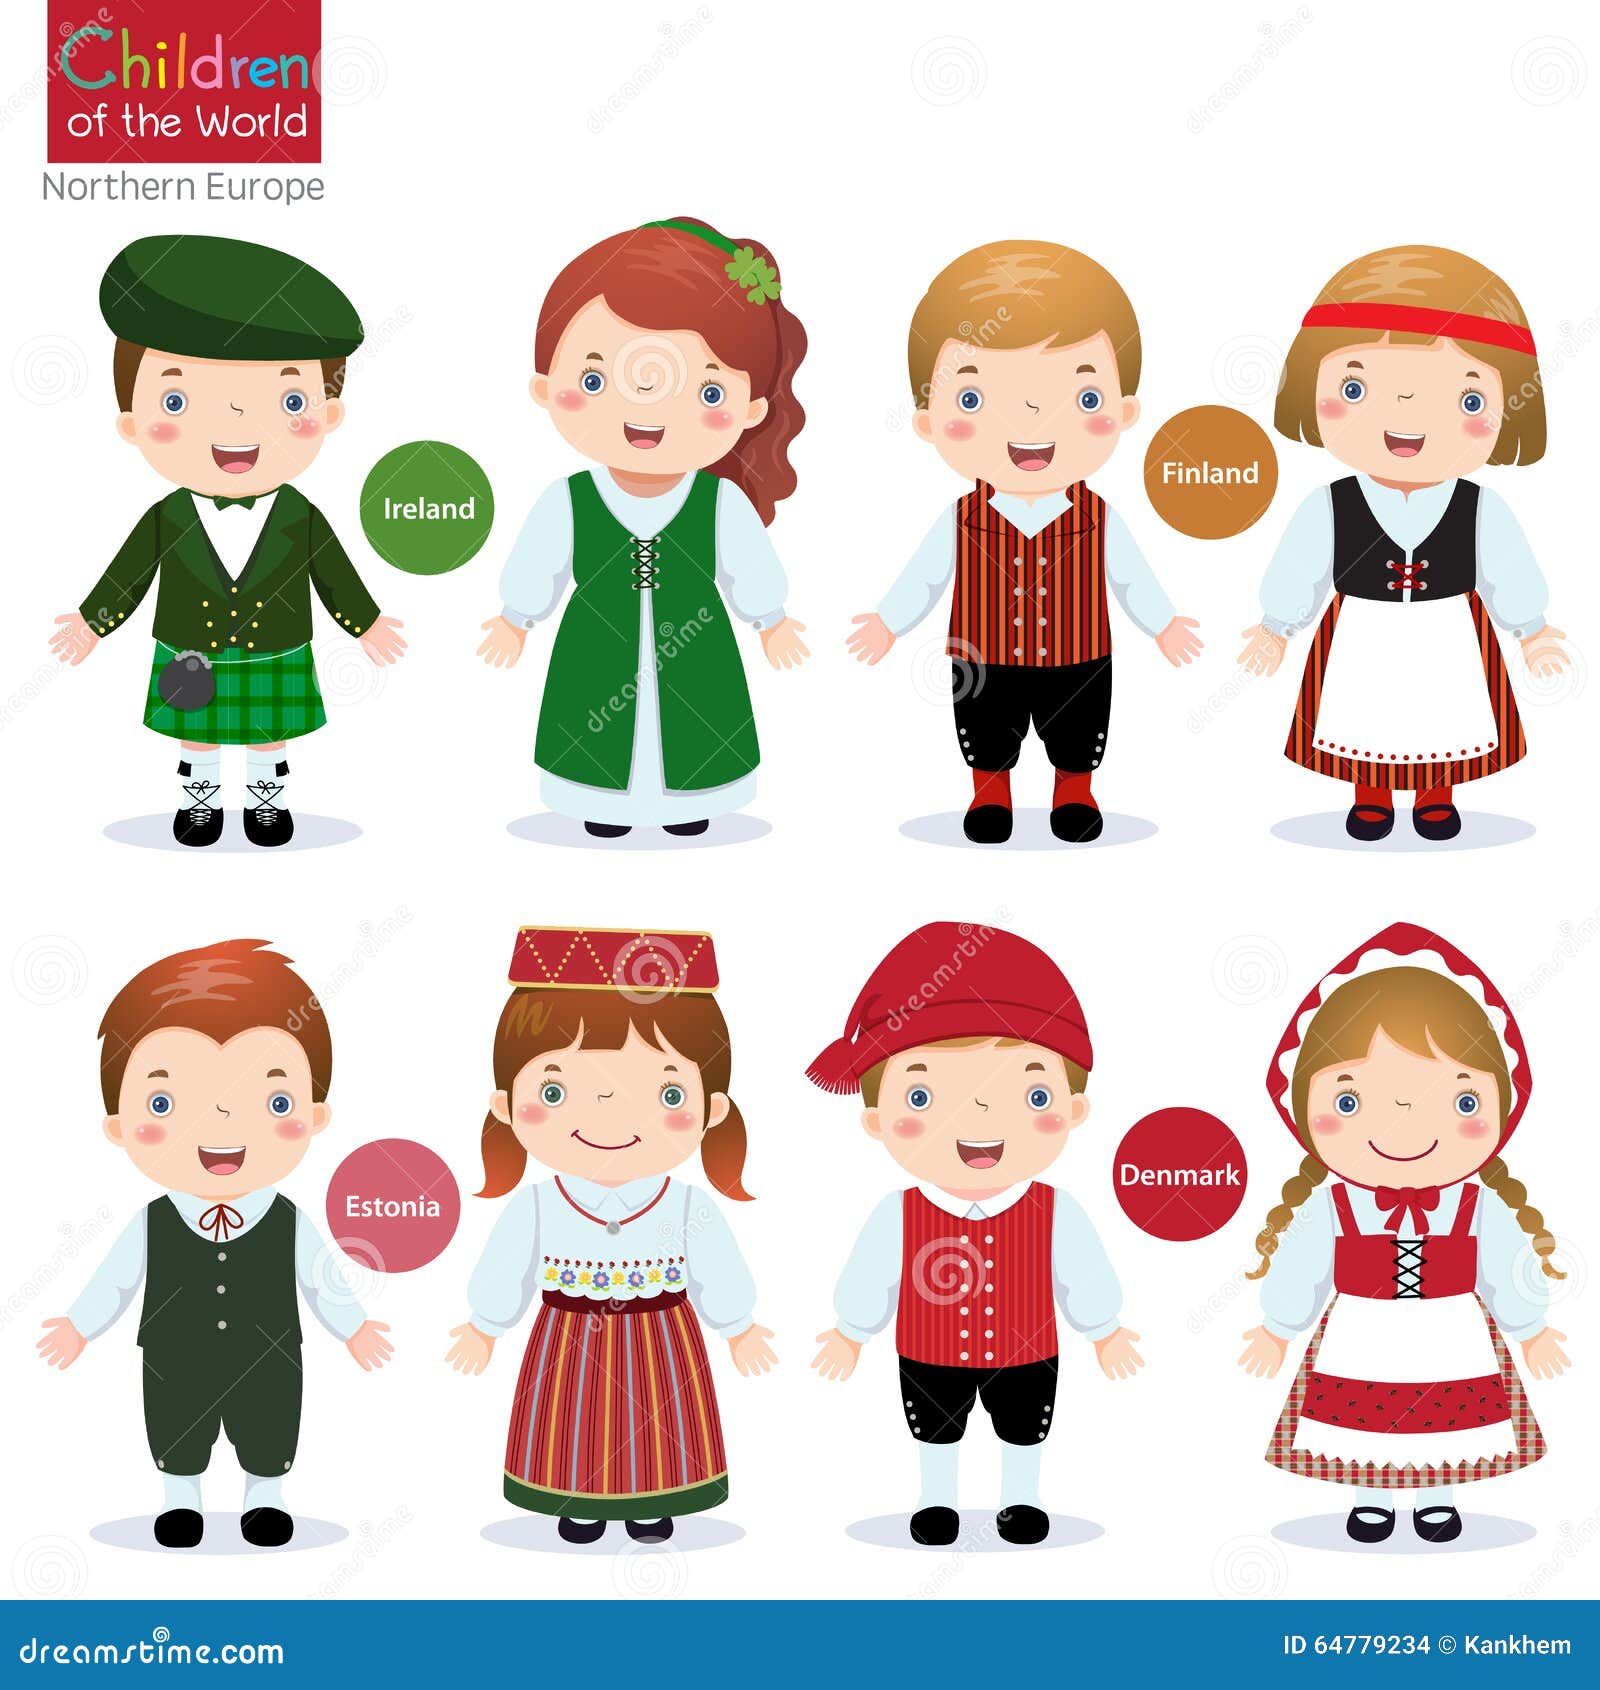 Children Of The World Ireland Finland Estonia And Denmark Illustration Megapixl